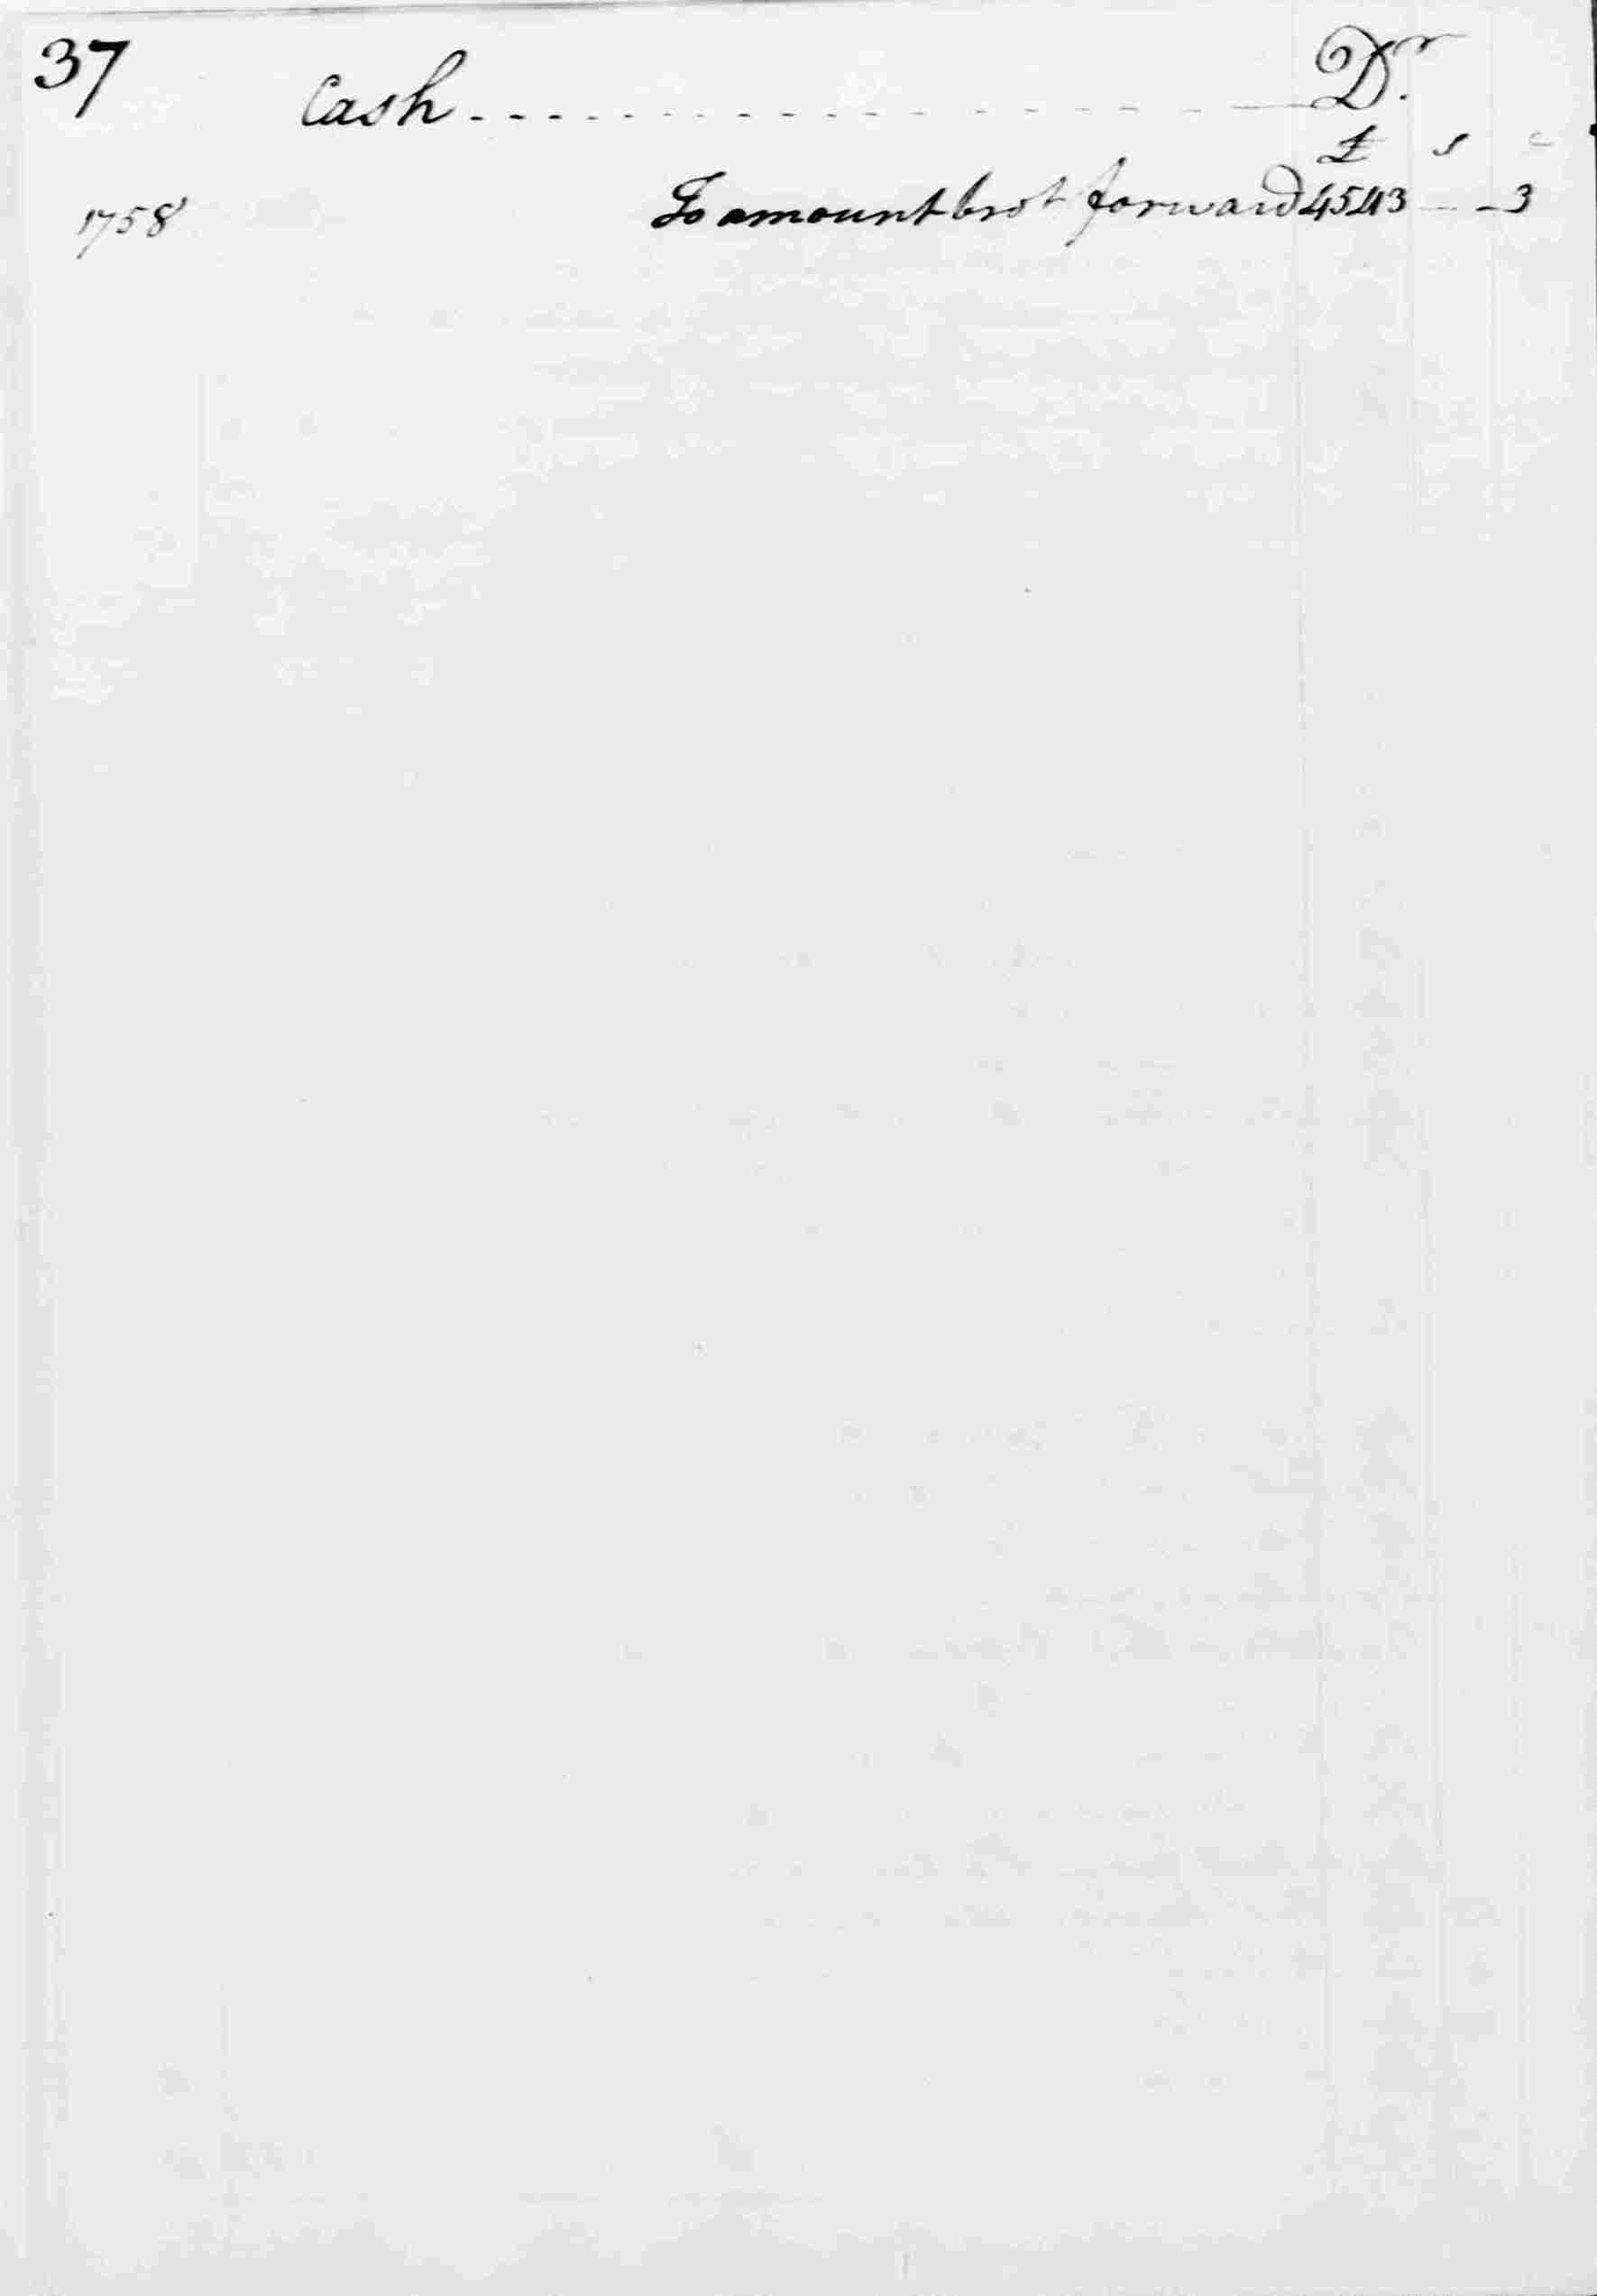 Ledger A, folio 37, left side